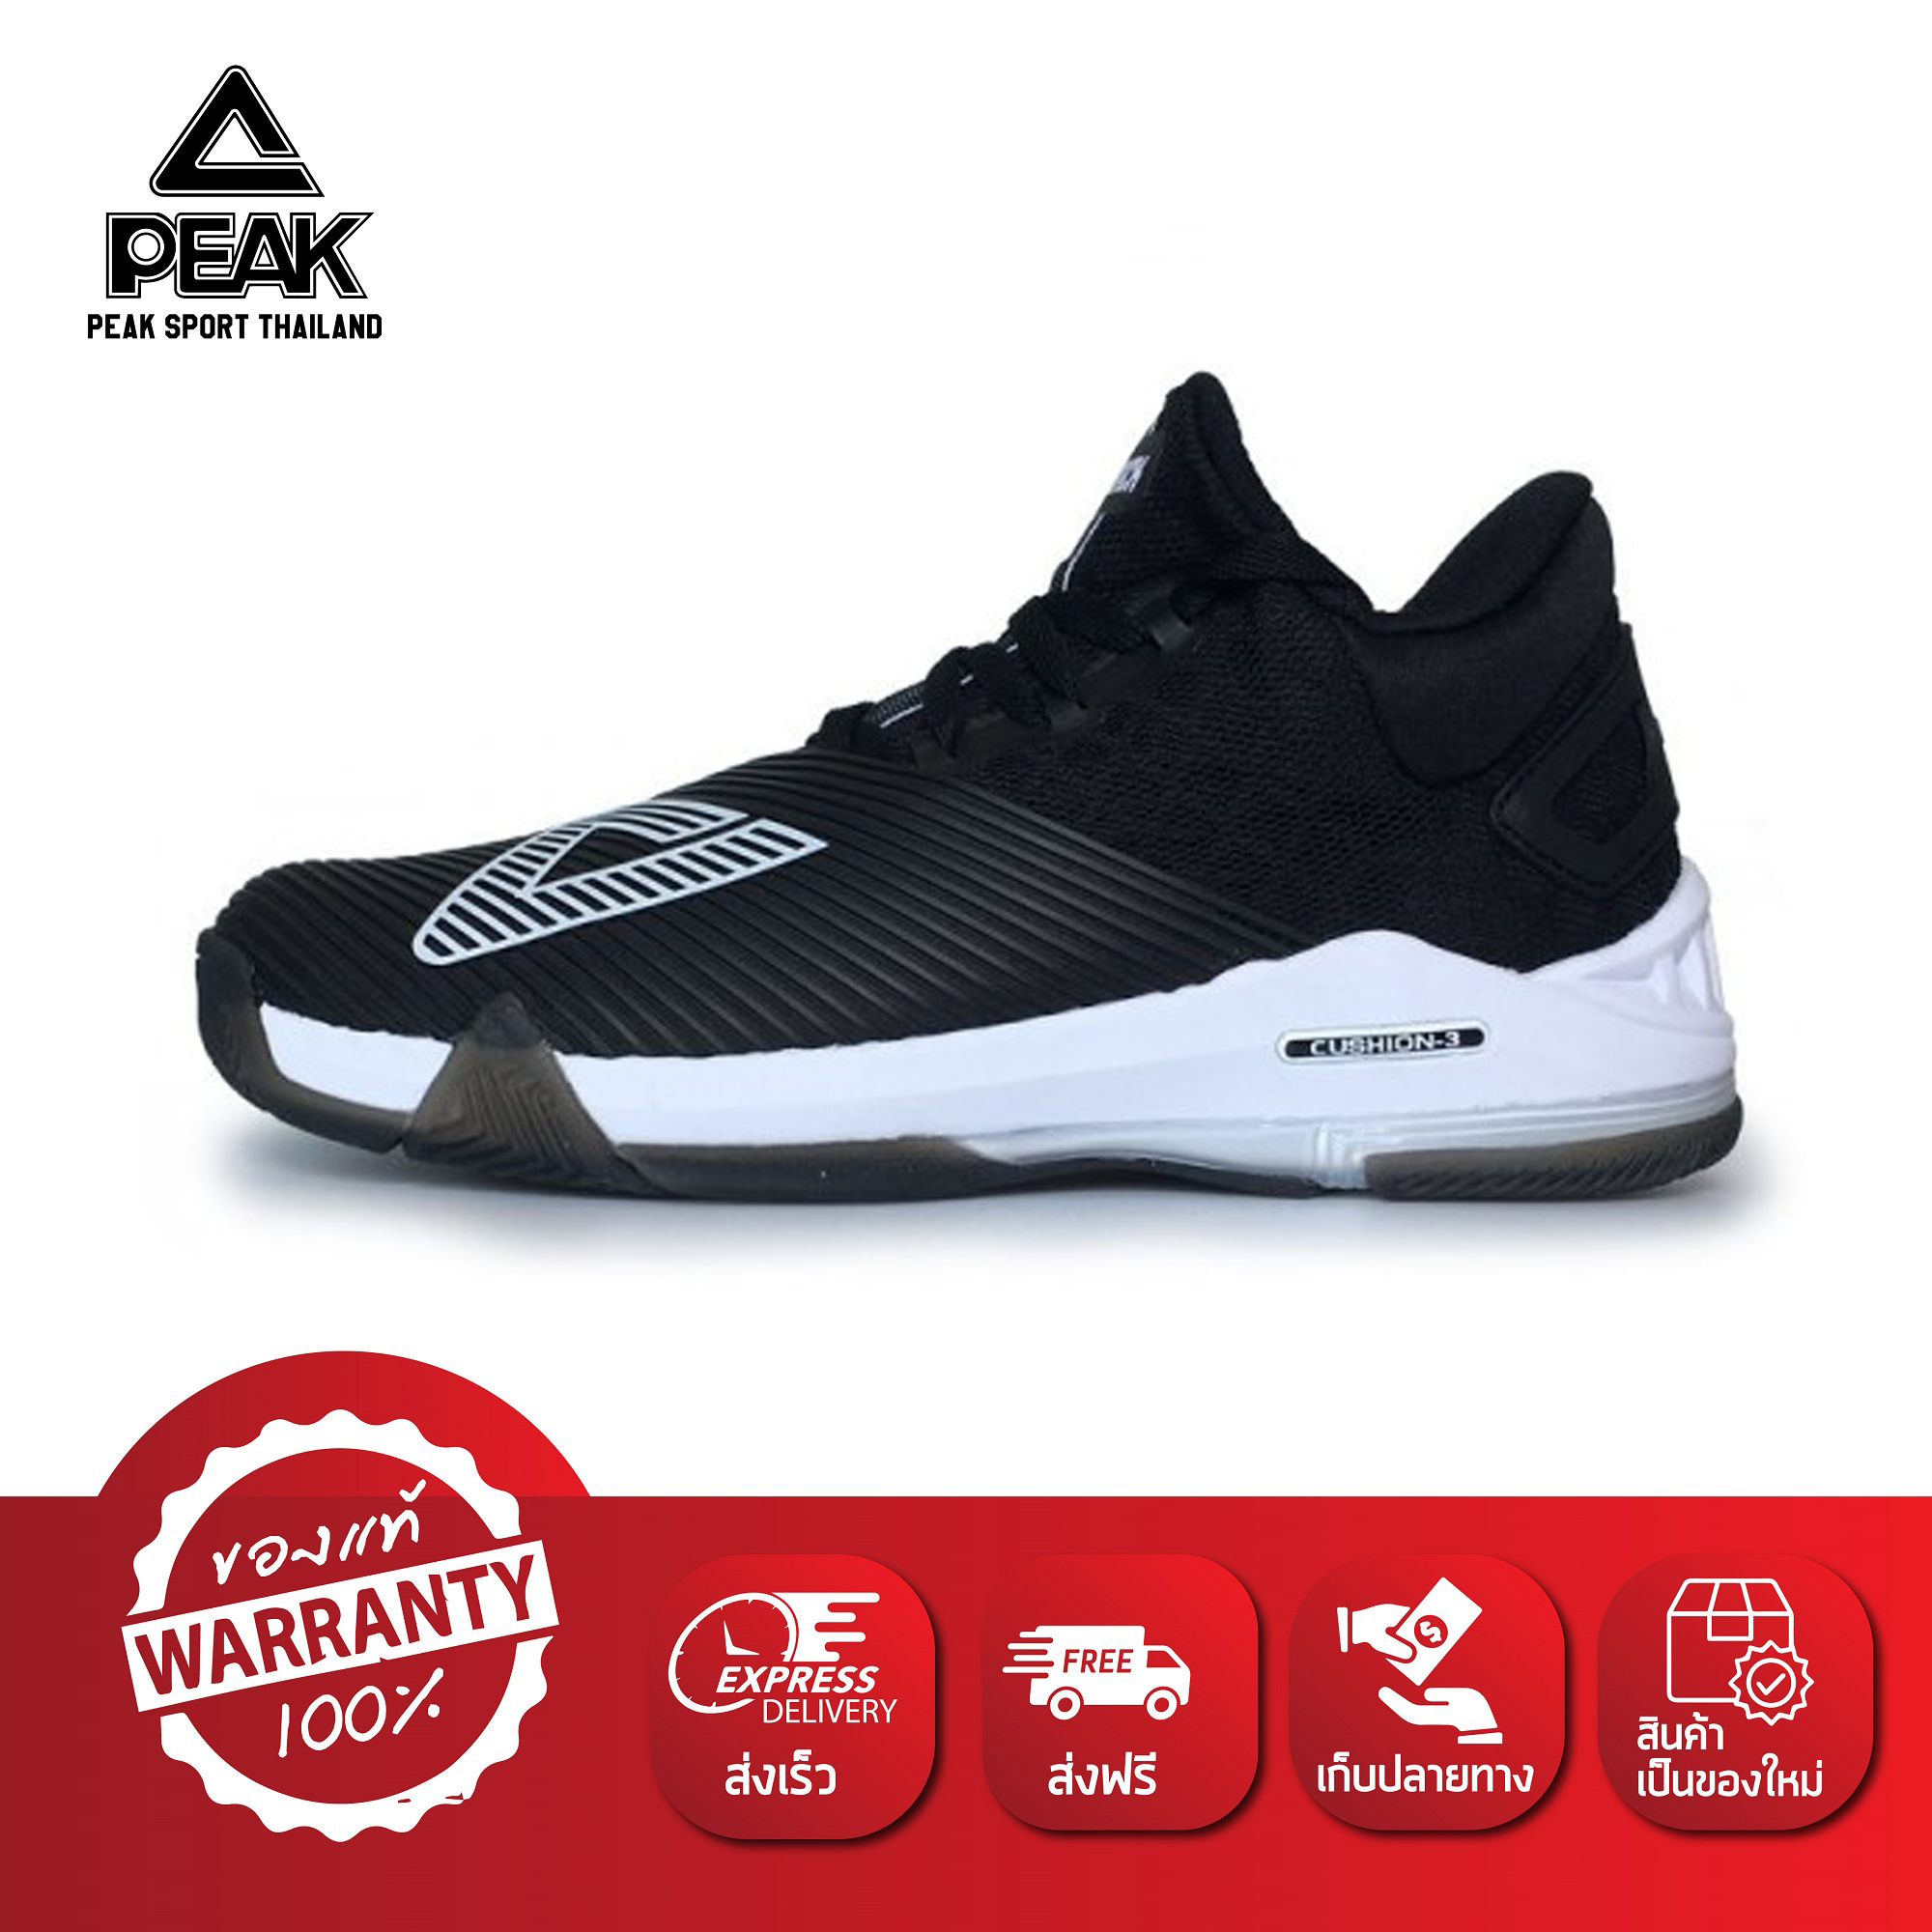 PEAK รองเท้า บาสเกตบอล ใช้แข่งขัน เอ็นบีเอ NBA Basketball shoes Attitude พีค รุ่น E82041A Black (มี 3 สี ดำ,น้ำเงิน,เหลือง)